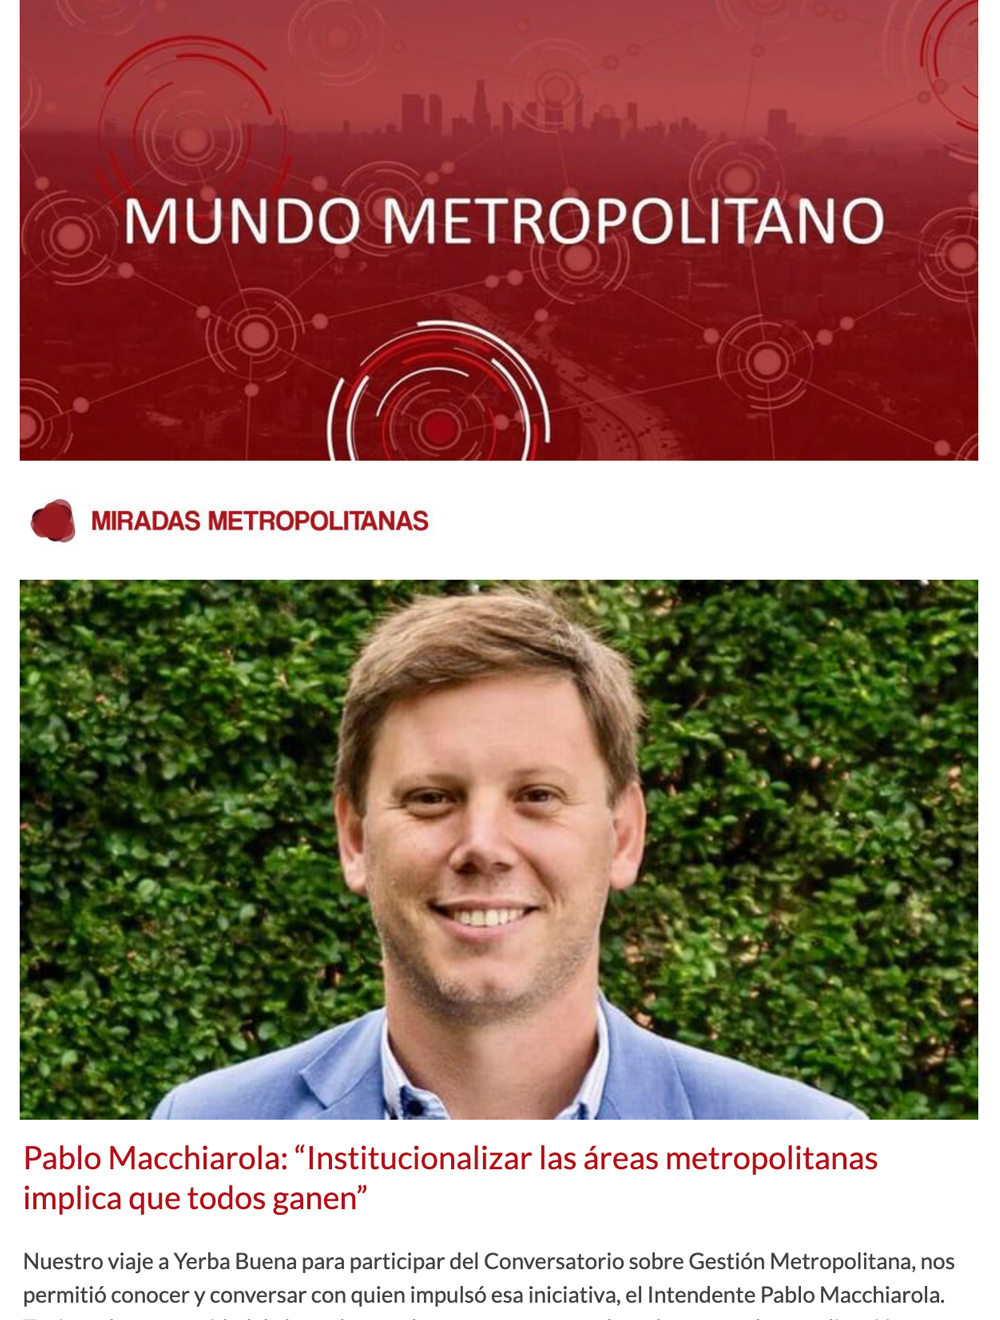 Newsletter Mundo Metropolitano 19